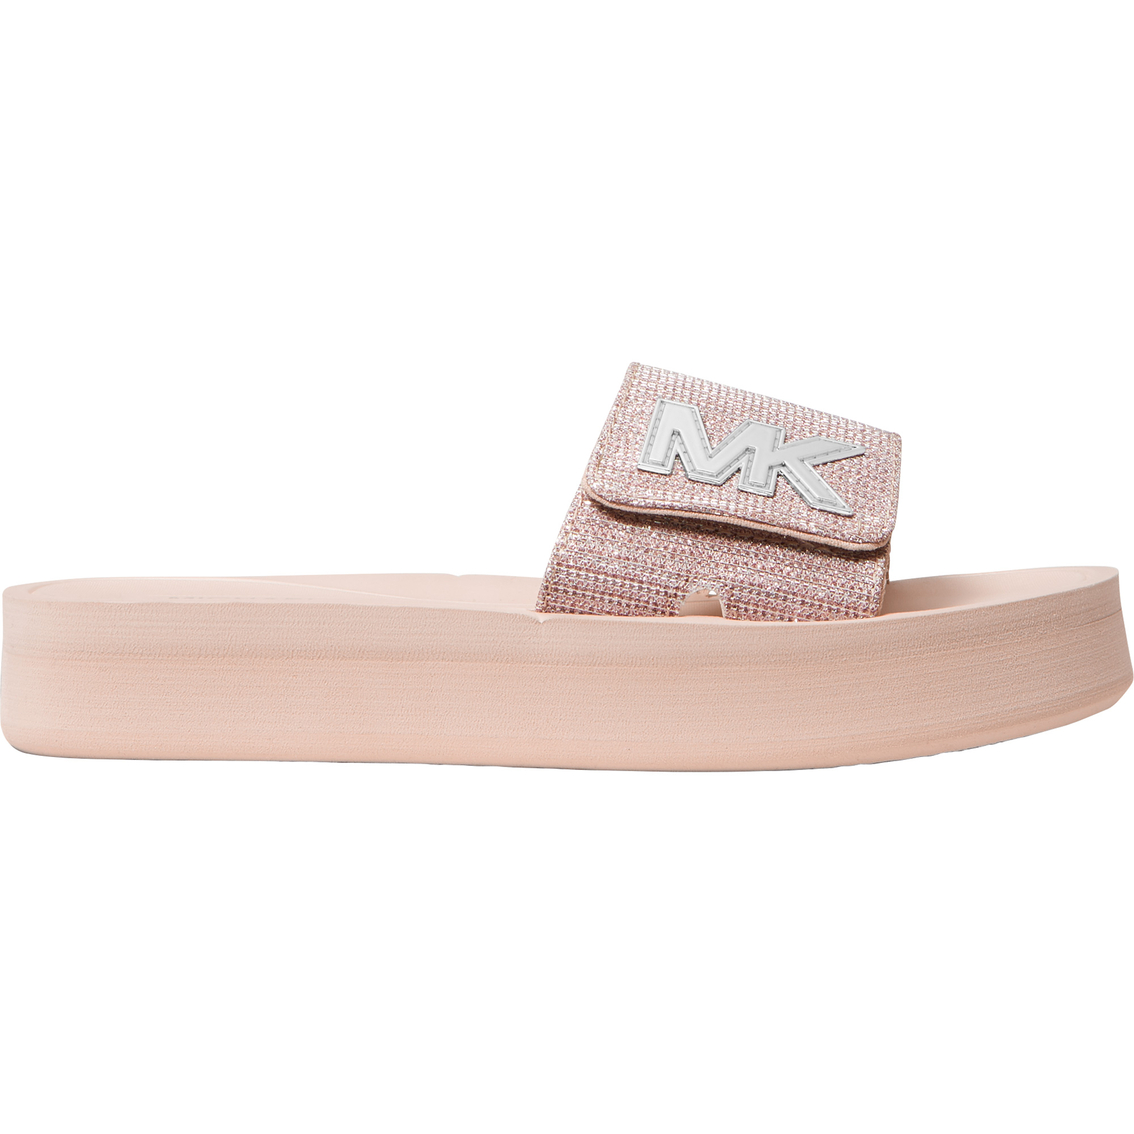 Michael Kors Women's Platform Slide Sandals - Image 2 of 3